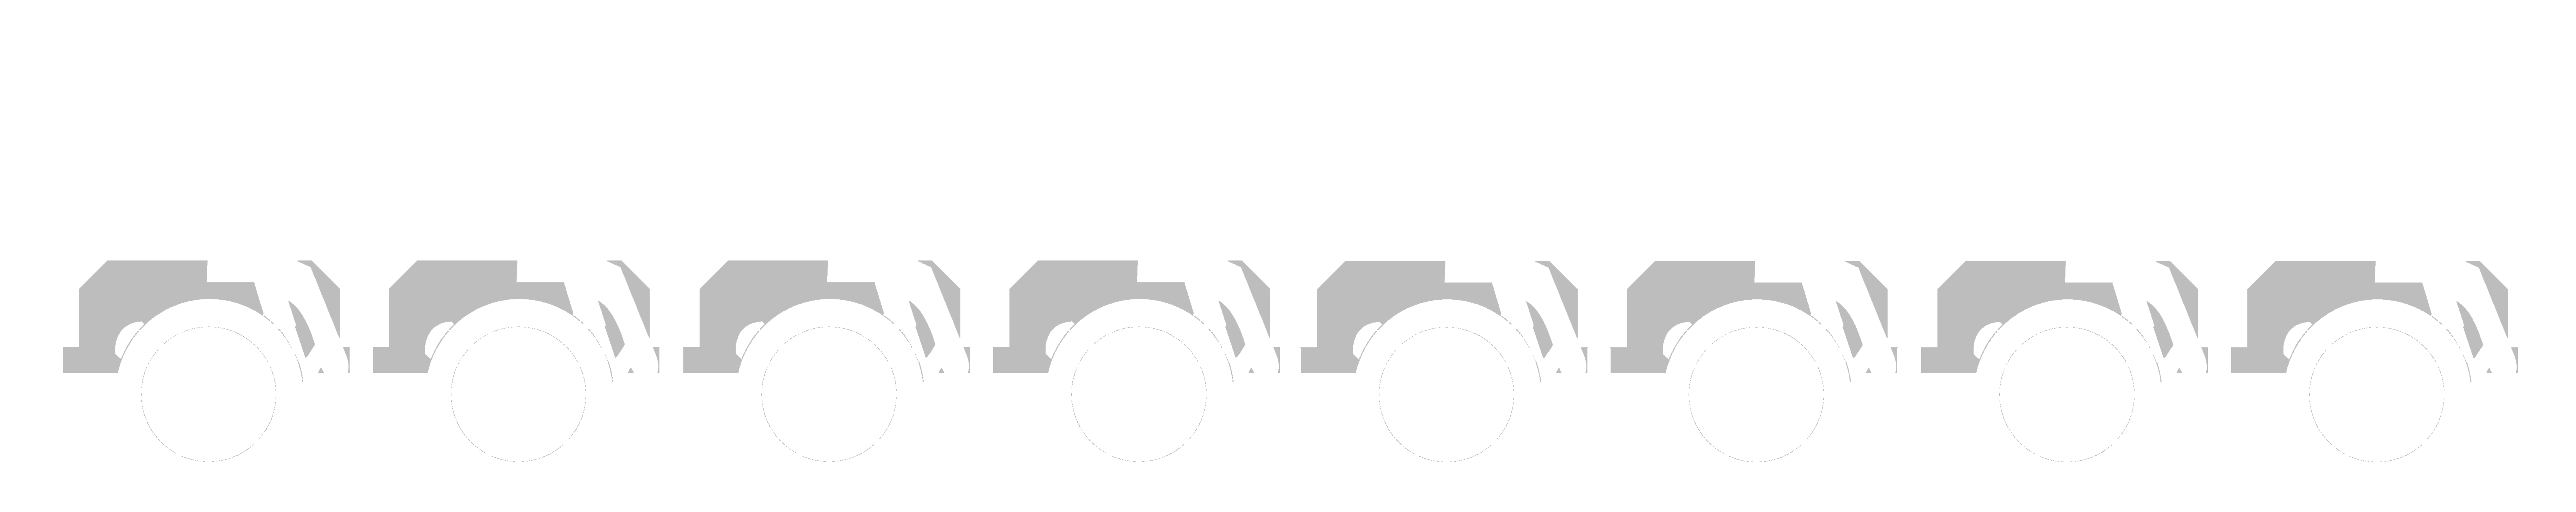 Heavy Haul Cargo Freight Forwarding | HeavyHaulCargo.com